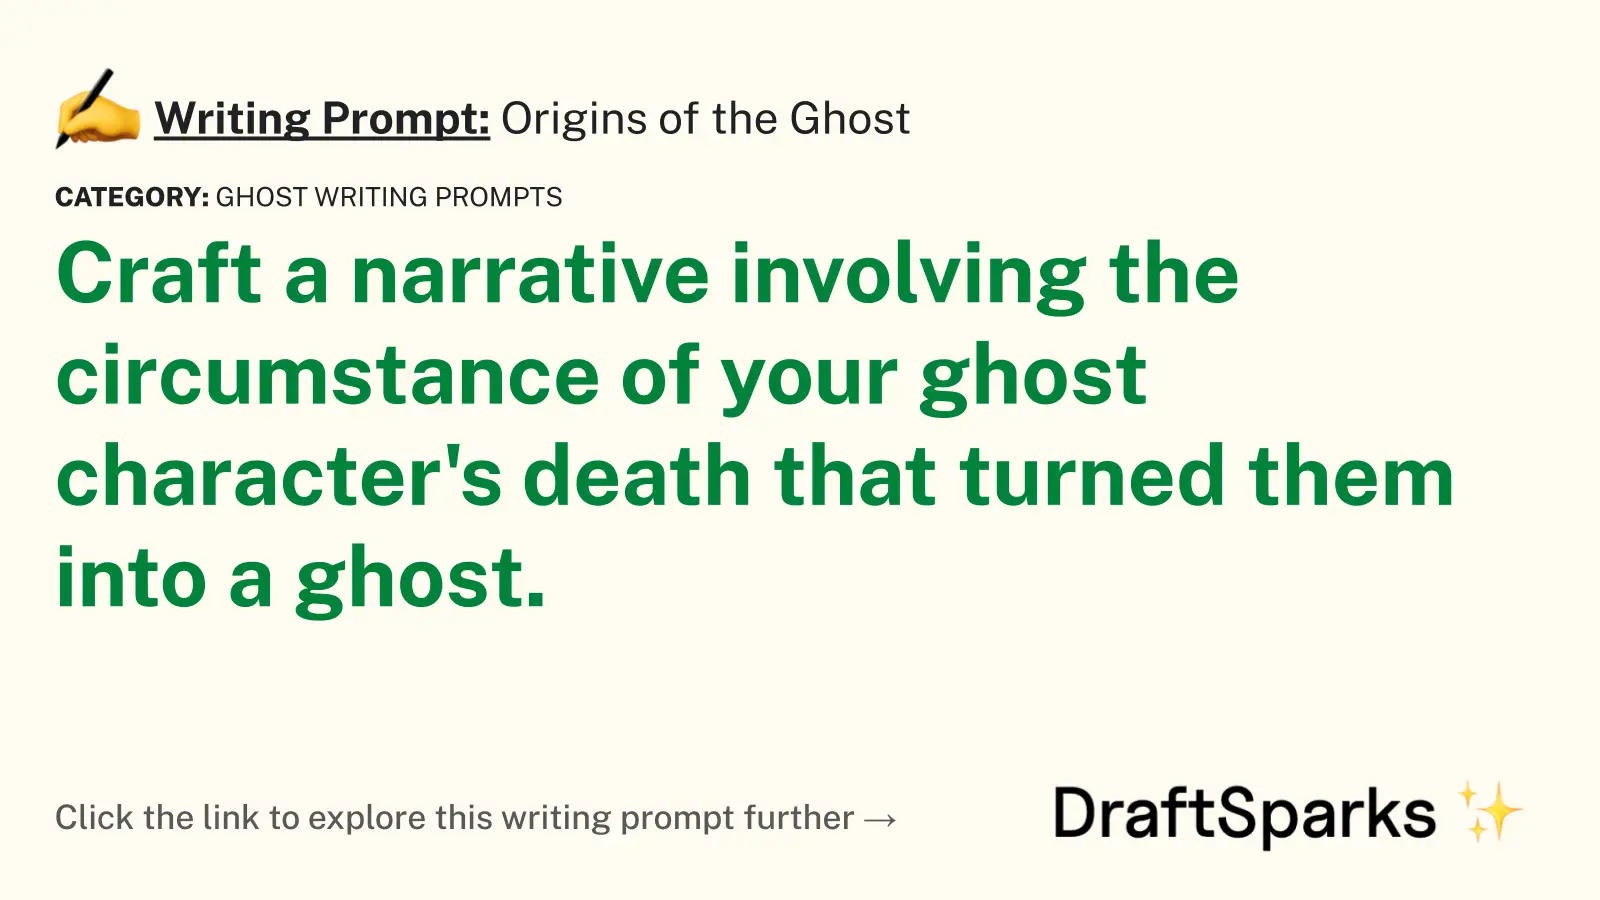 Origins of the Ghost